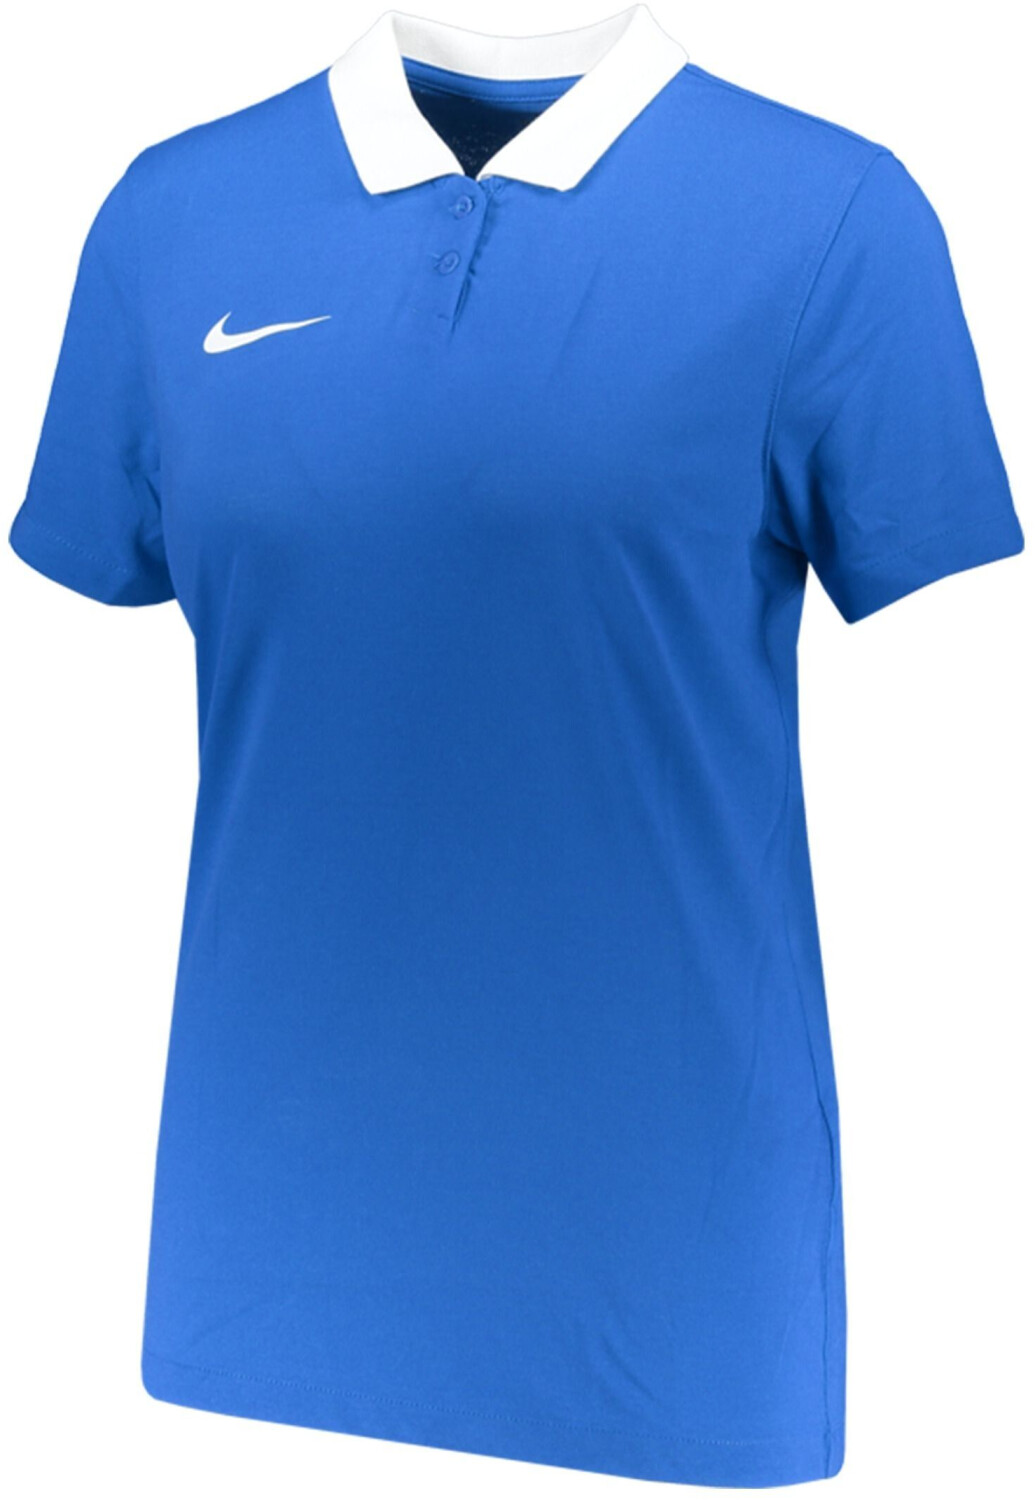 Photos - Football Kit Nike CW6965 